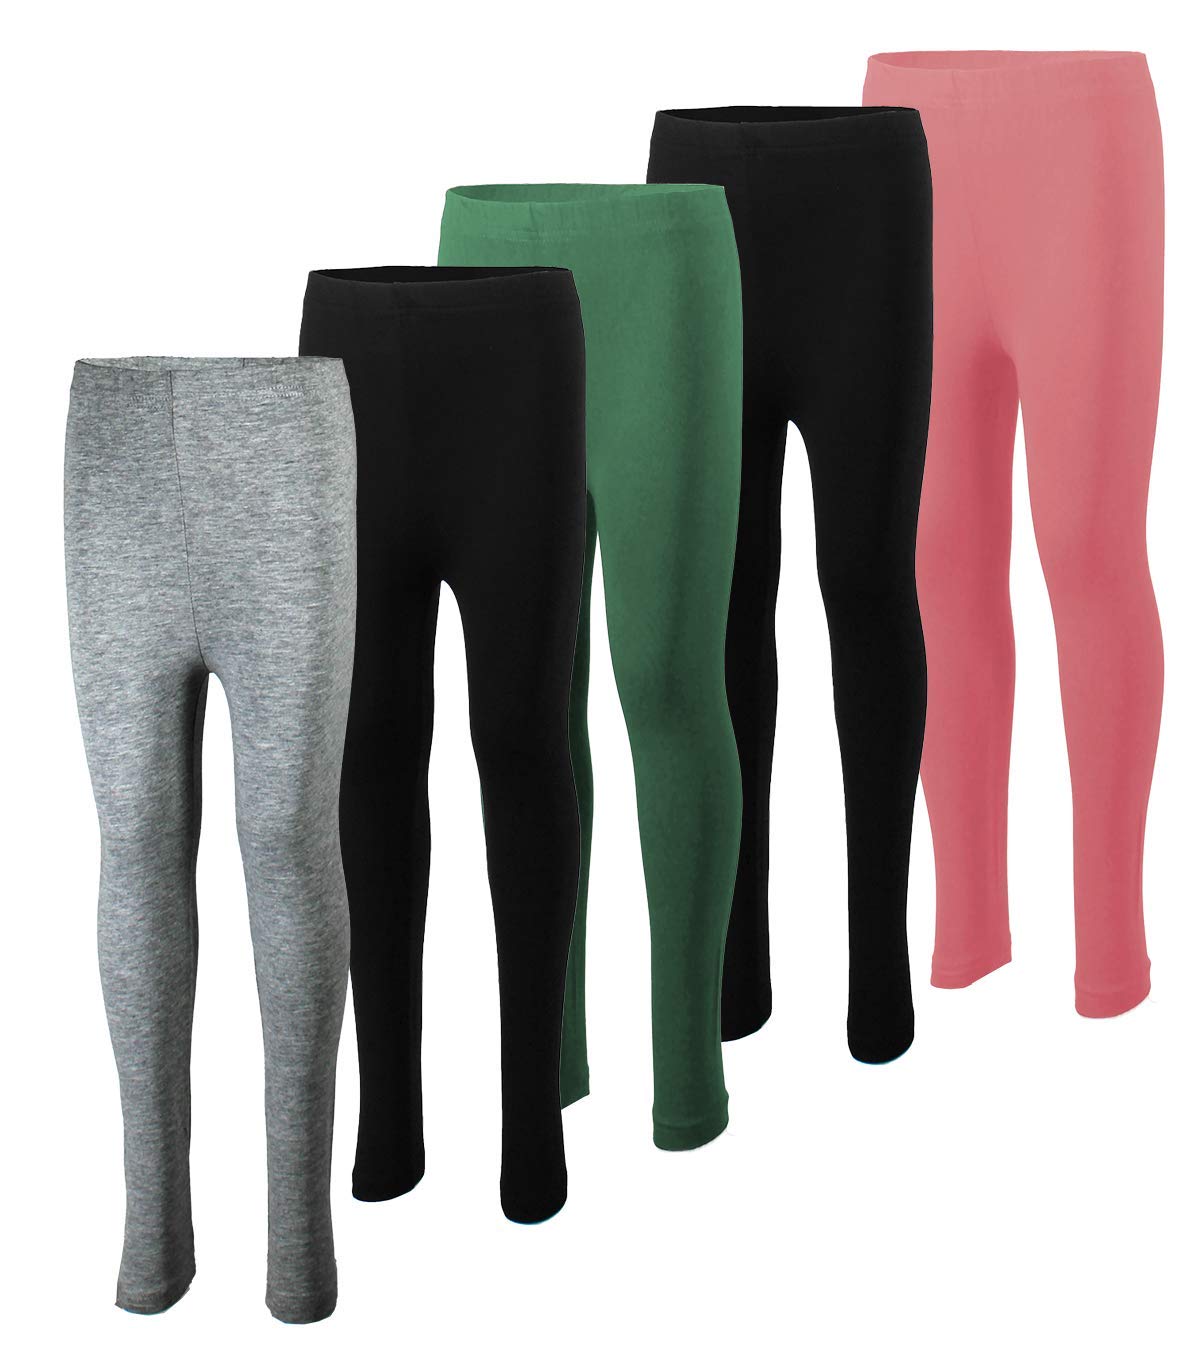 MISS POPULAR 5-Pack Girls Leggings Sizes 4-16 Soft Comfortable Cotton –